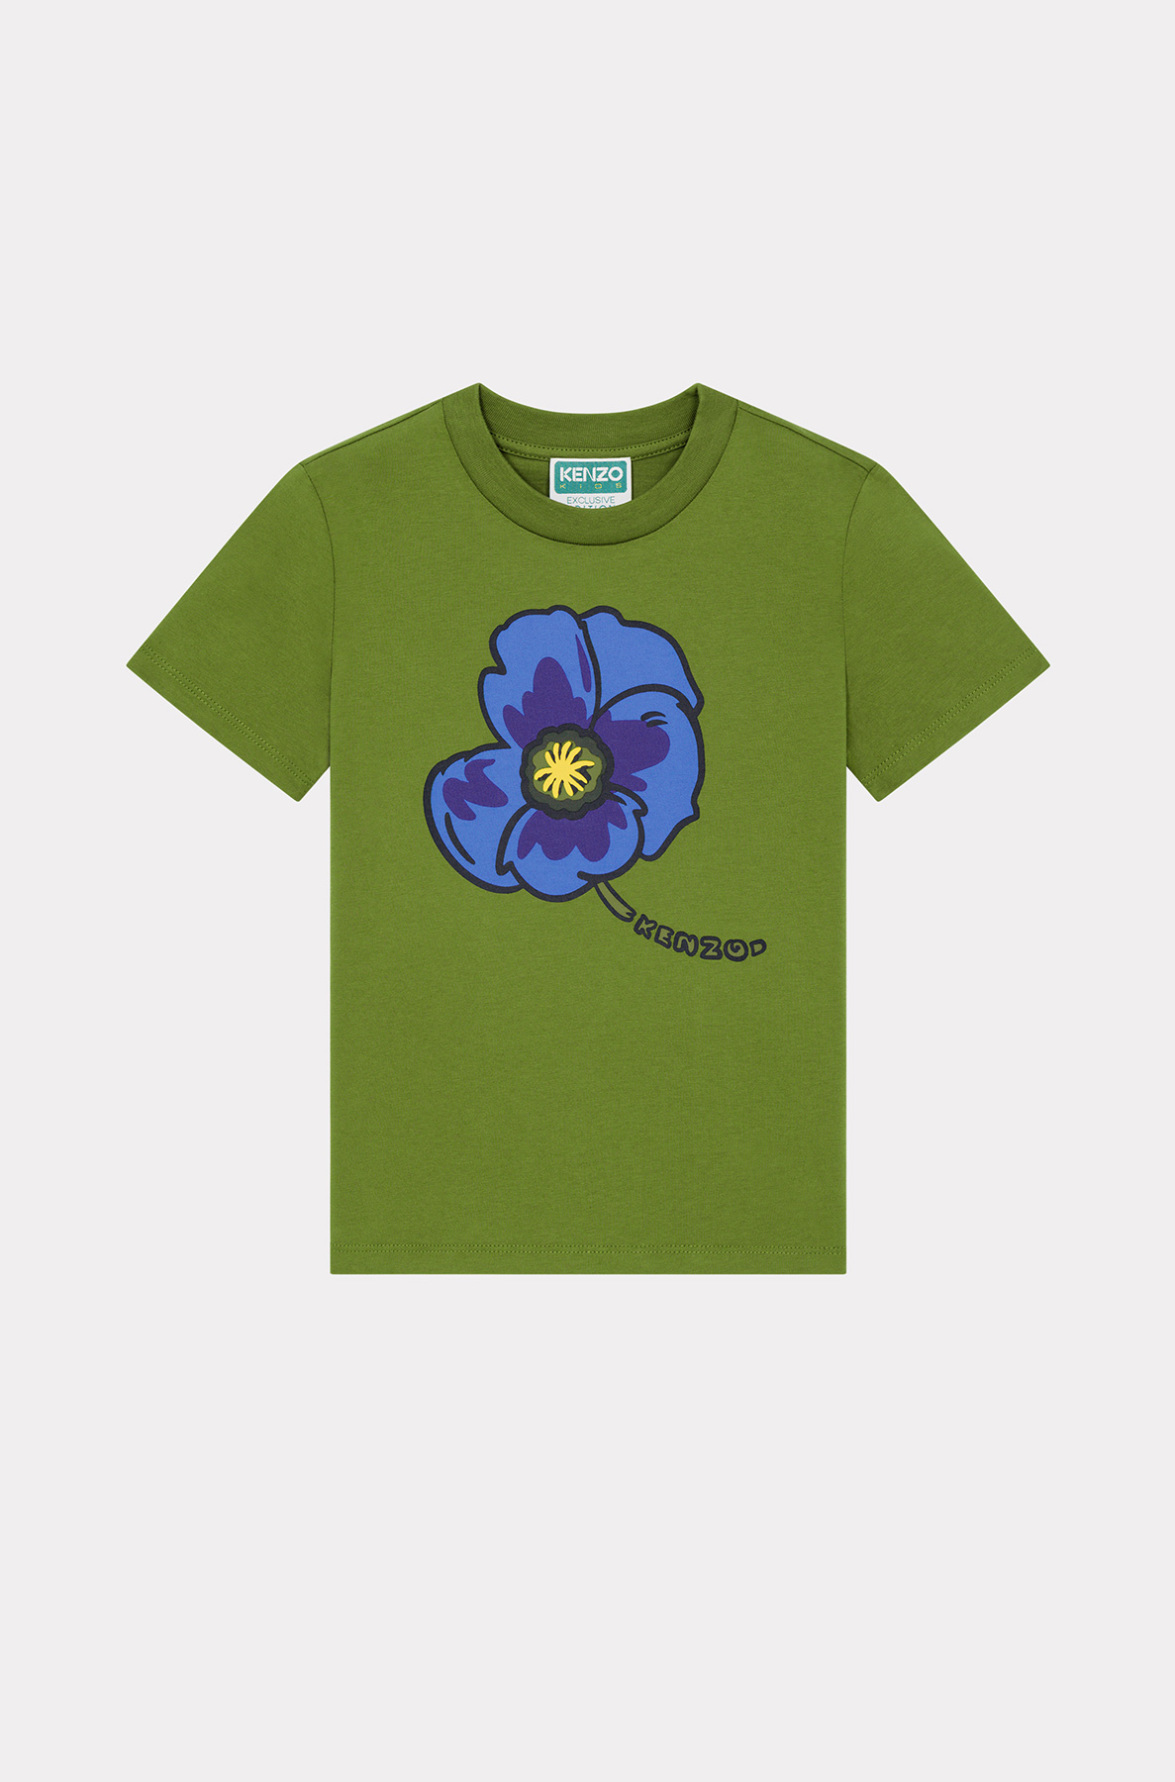 Kenzo Enfants T-shirt 'Capsule High Summer' Unisexe Vert Bouteille - Taille 5a